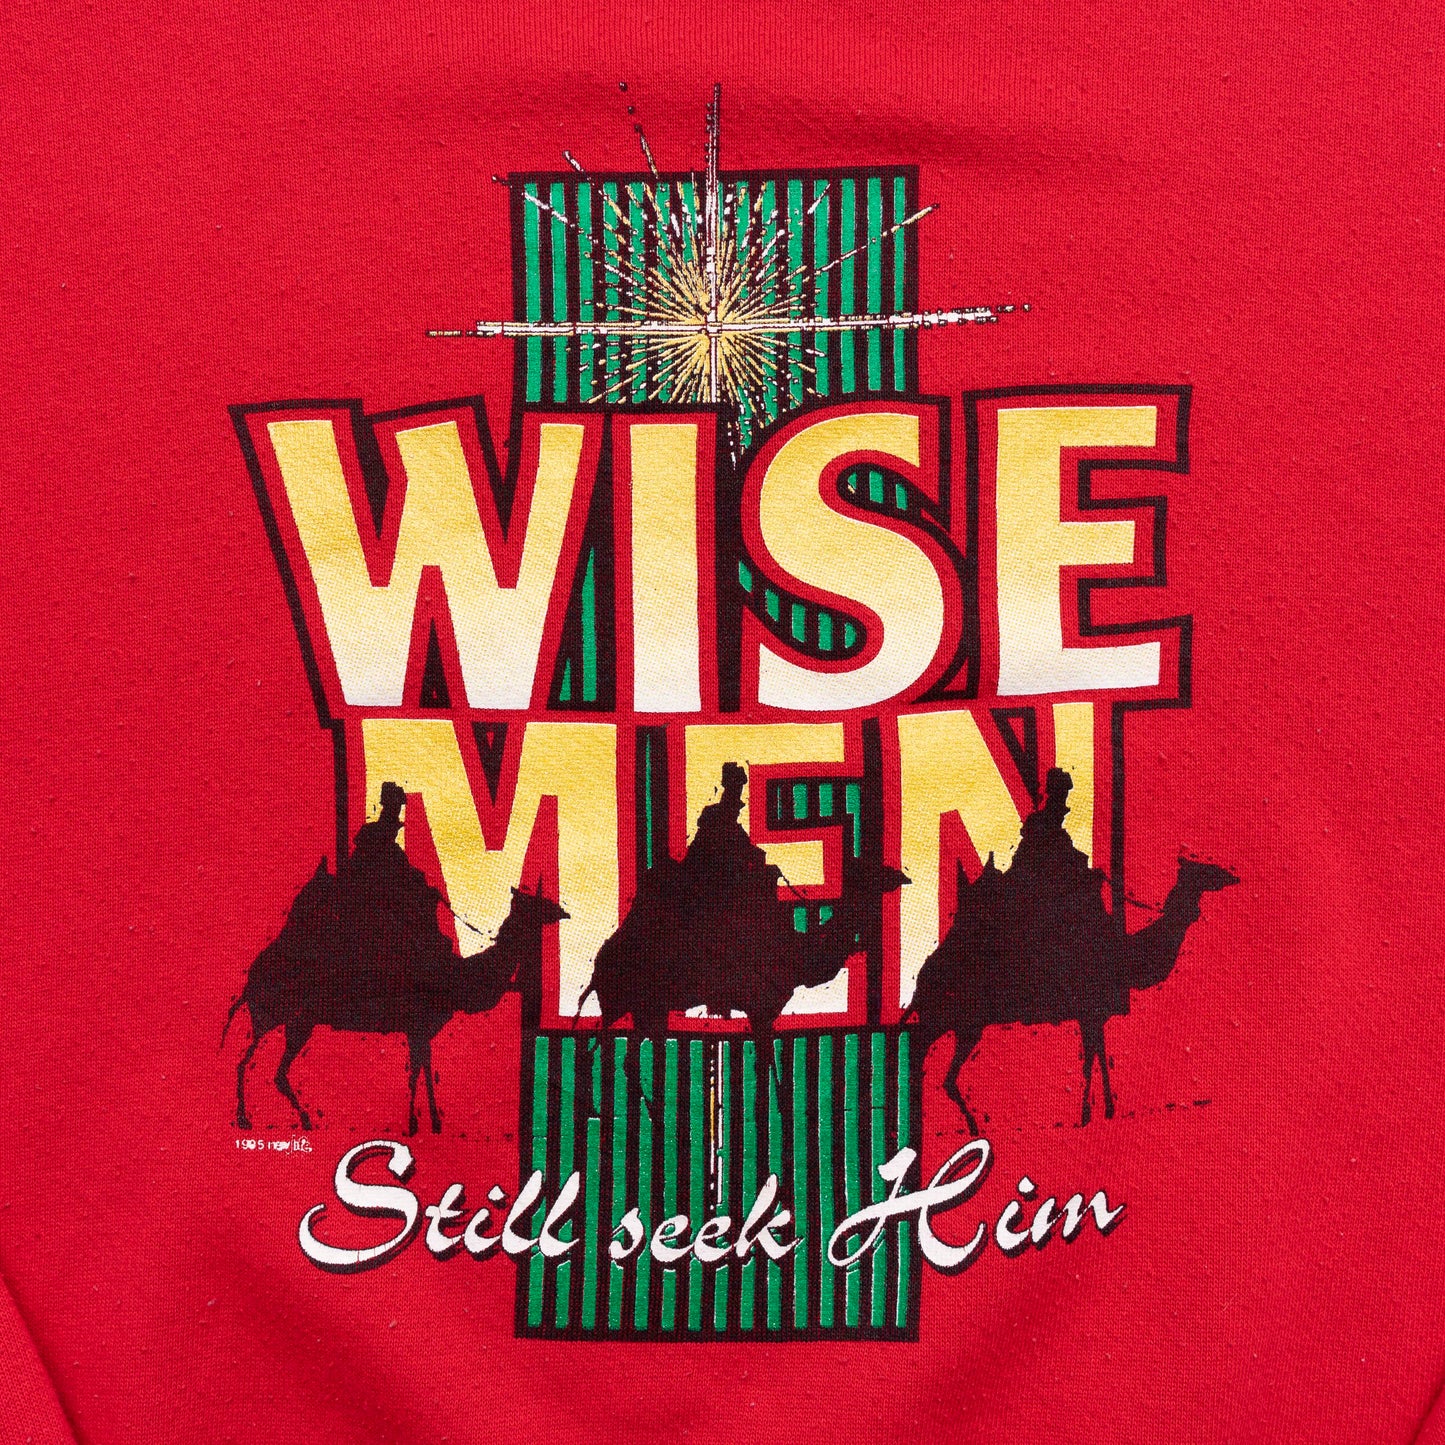 Wise Men Church Sweater, XXL